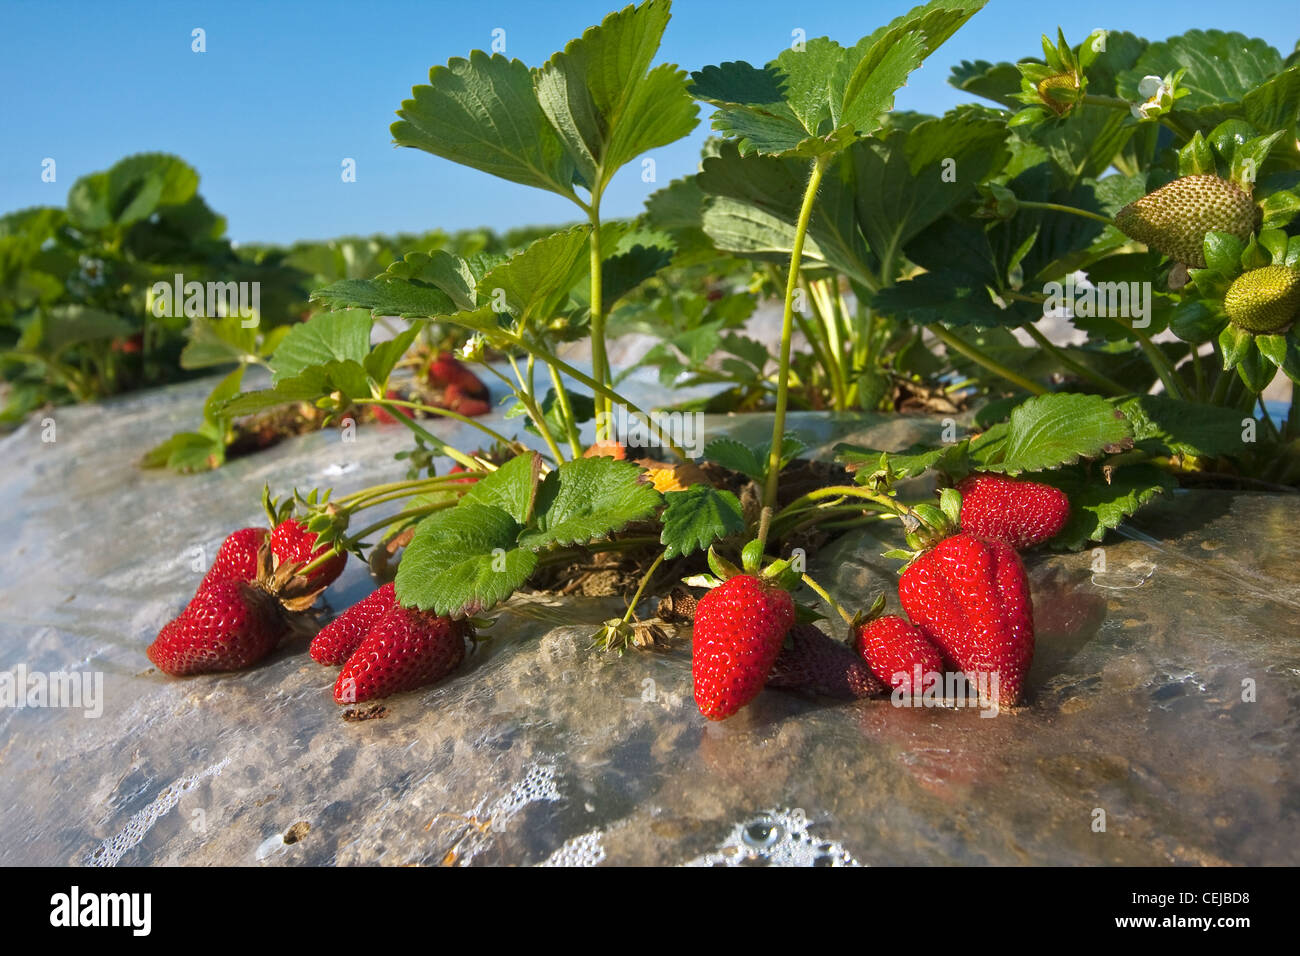 https://c8.alamy.com/compes/cejbd8/agricultura-acercamiento-de-fresas-maduras-en-el-campo-cerca-dinuba-california-usa-cejbd8.jpg